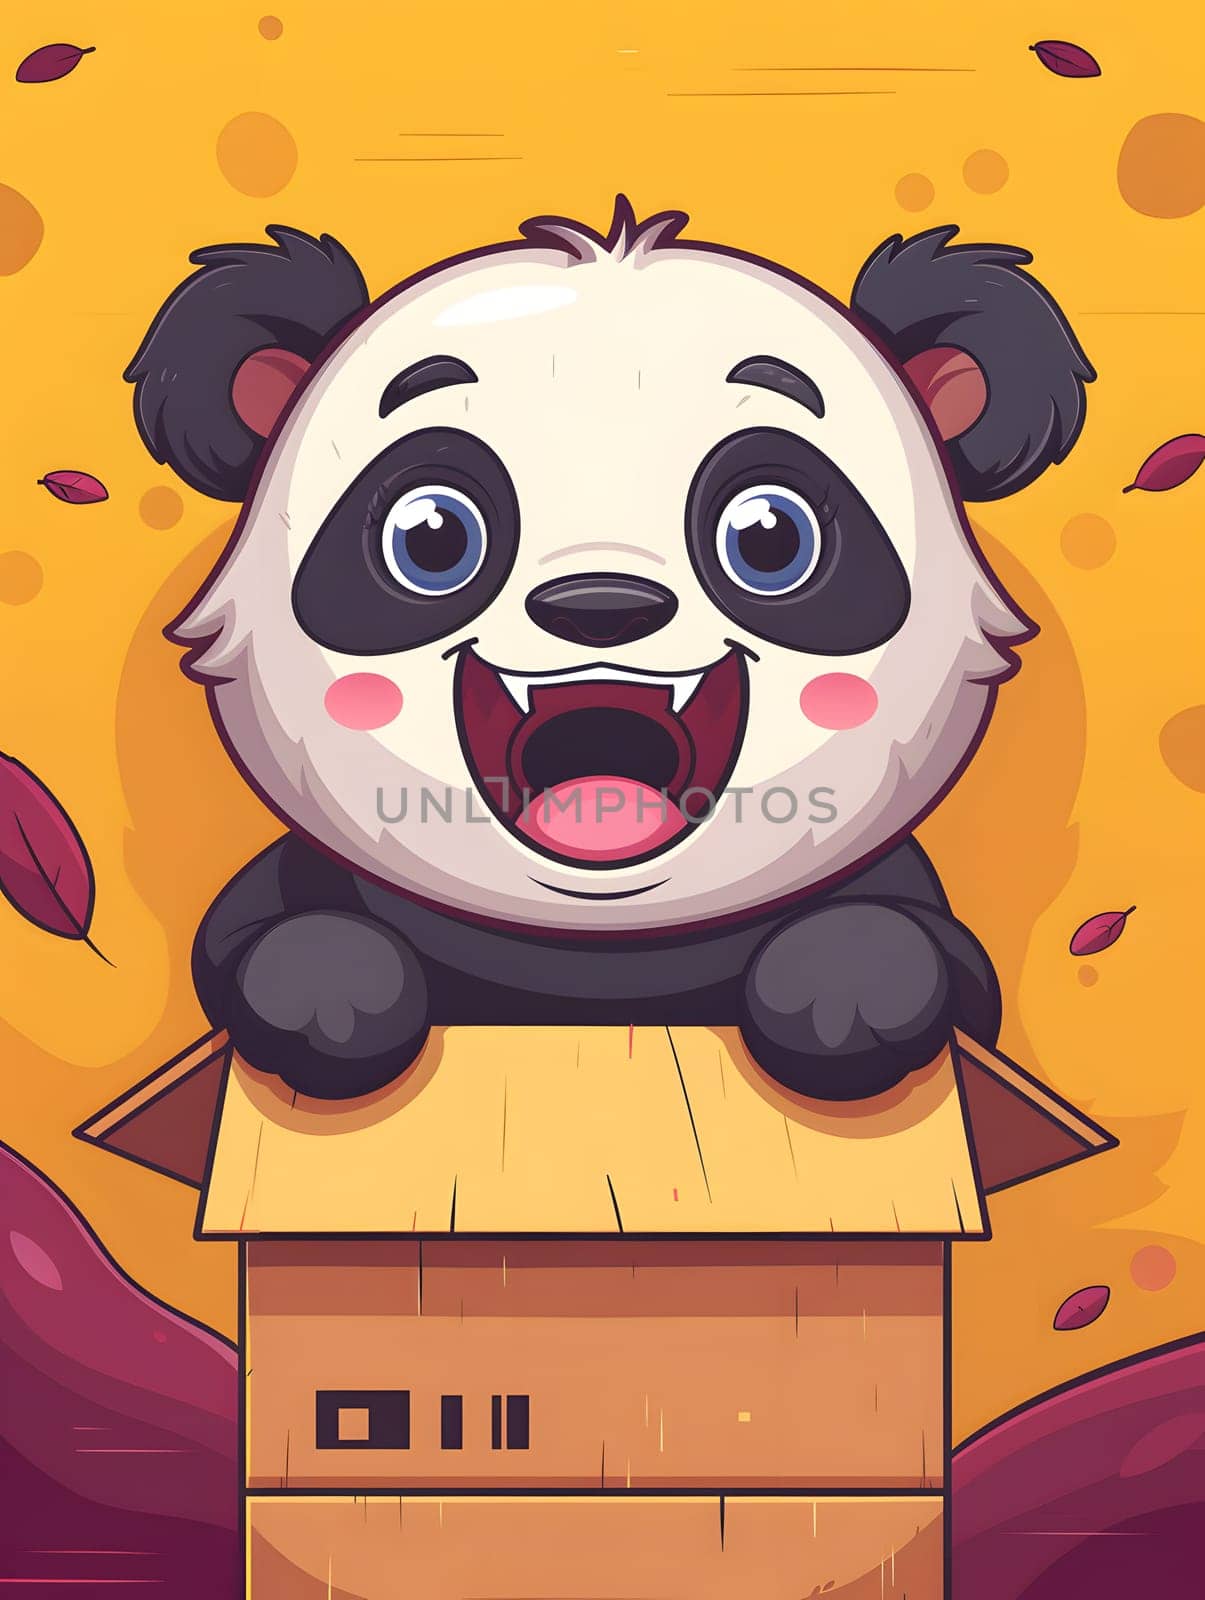 A happy cartoon panda bear, a vertebrate mammal, is sitting in a magenta cardboard box. This cute art animation is part of a visual arts animated cartoon